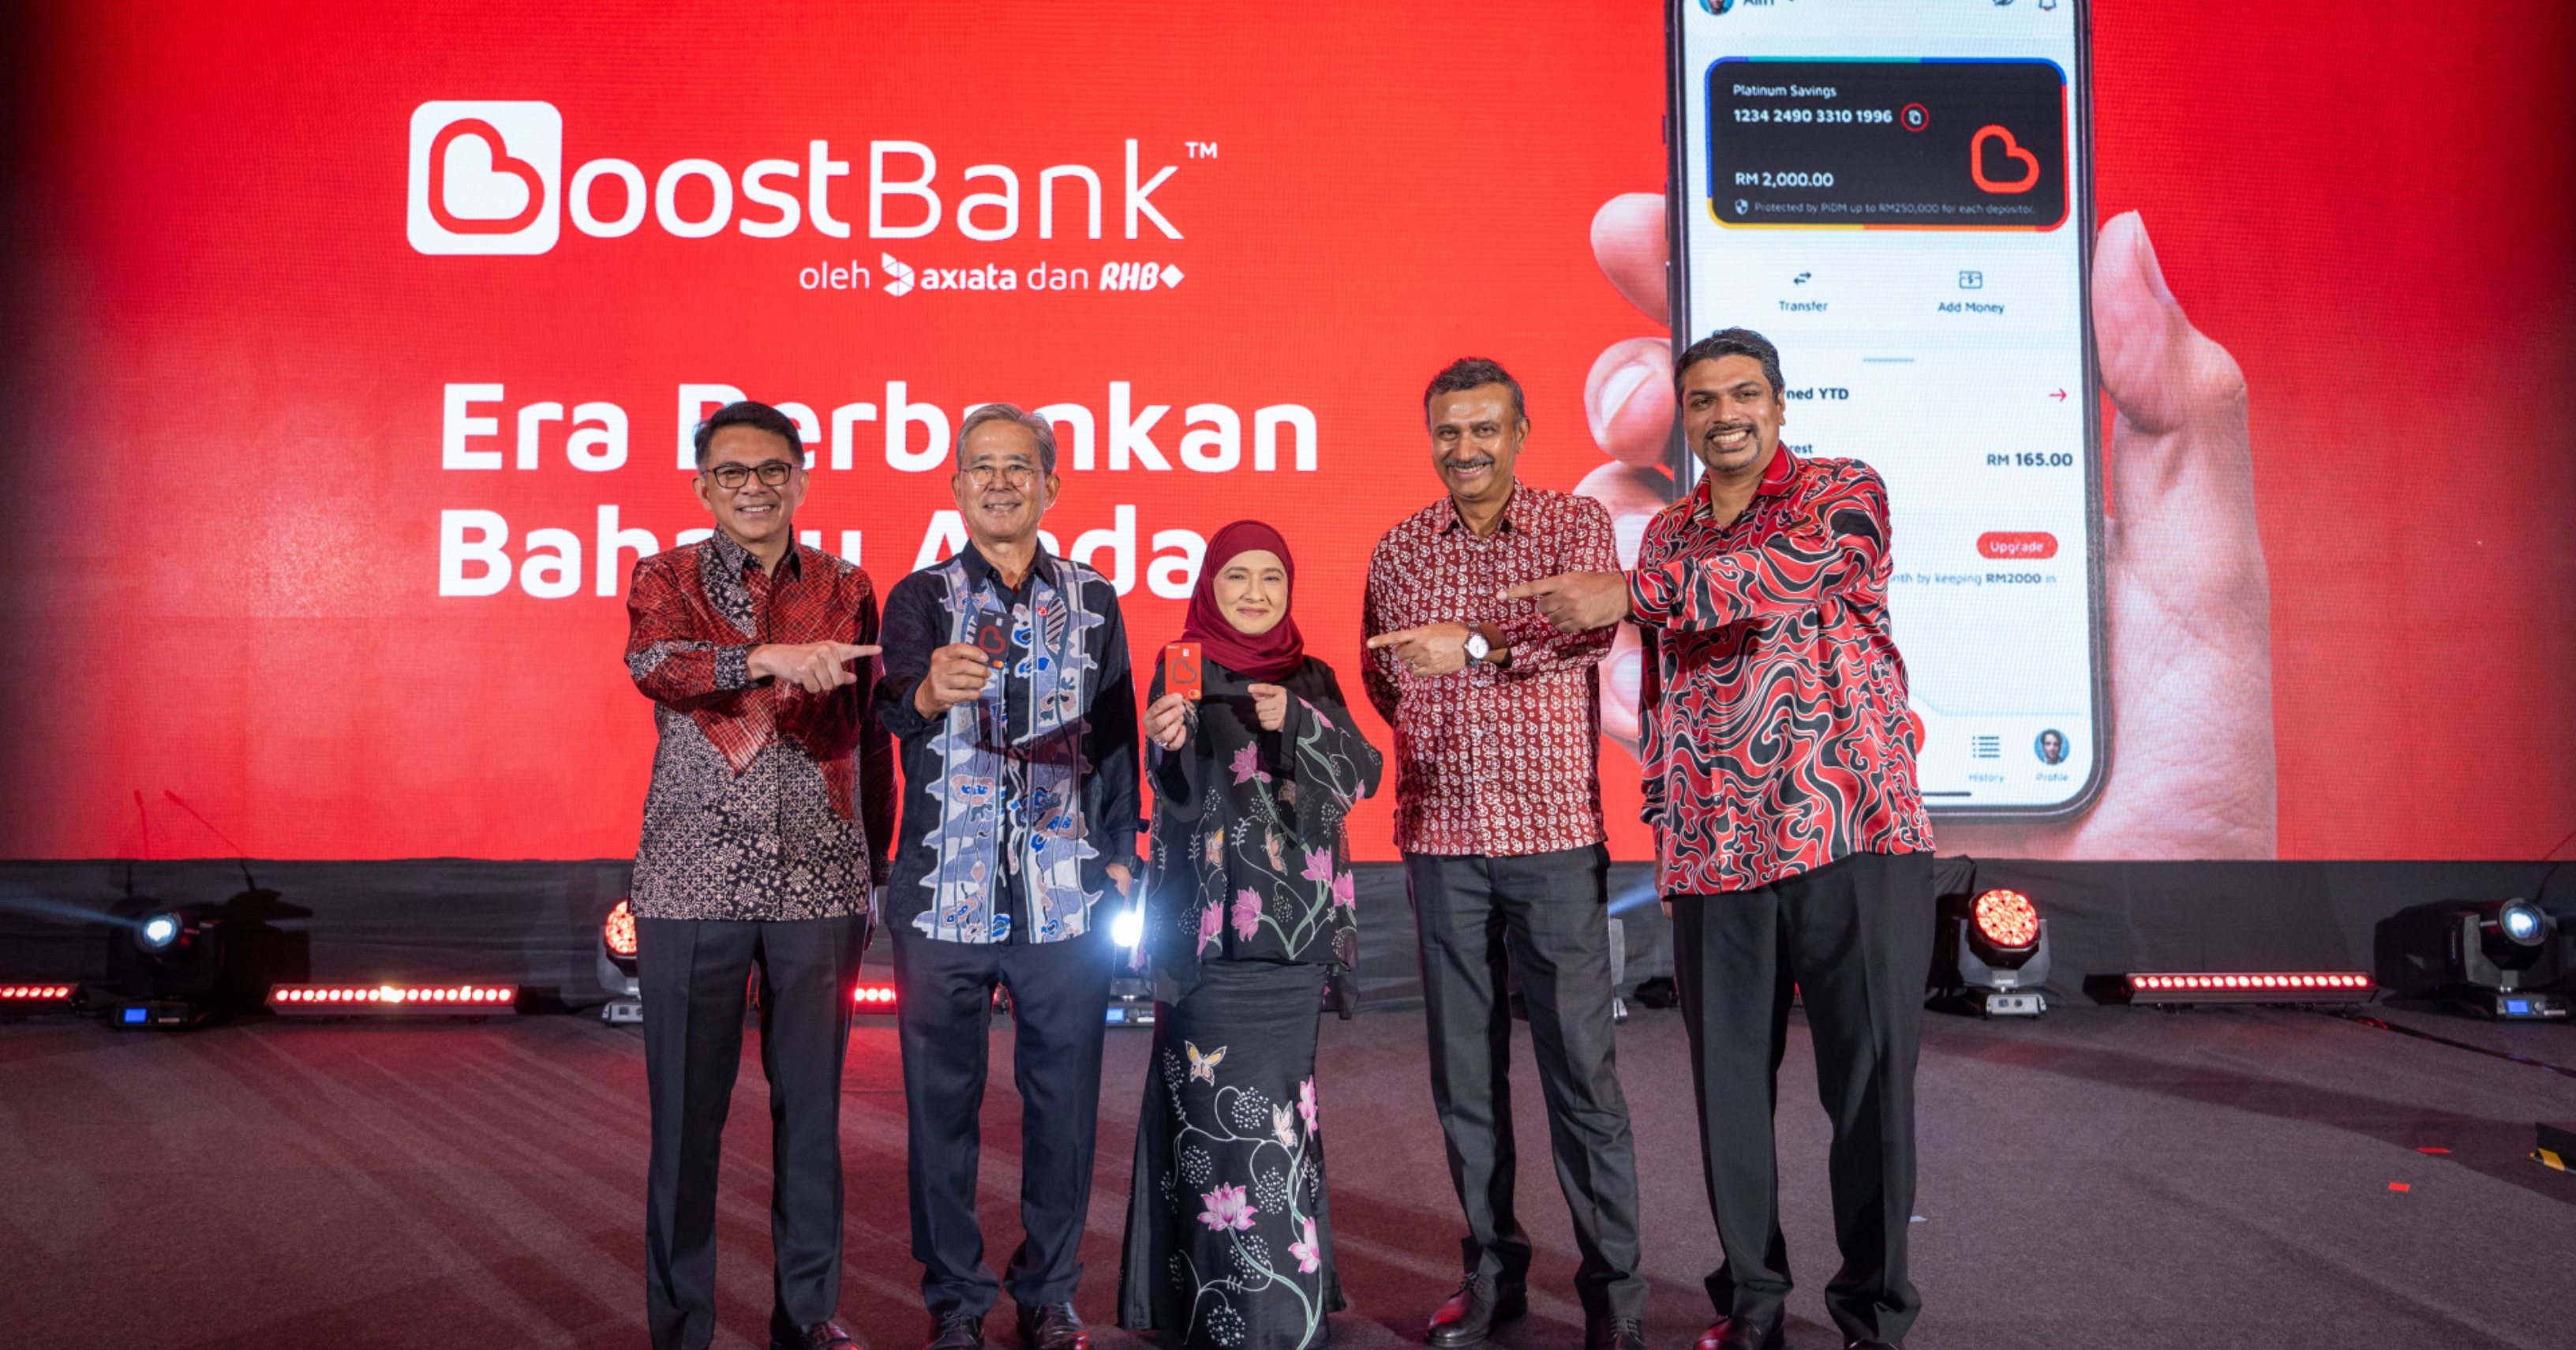 Boost Bank